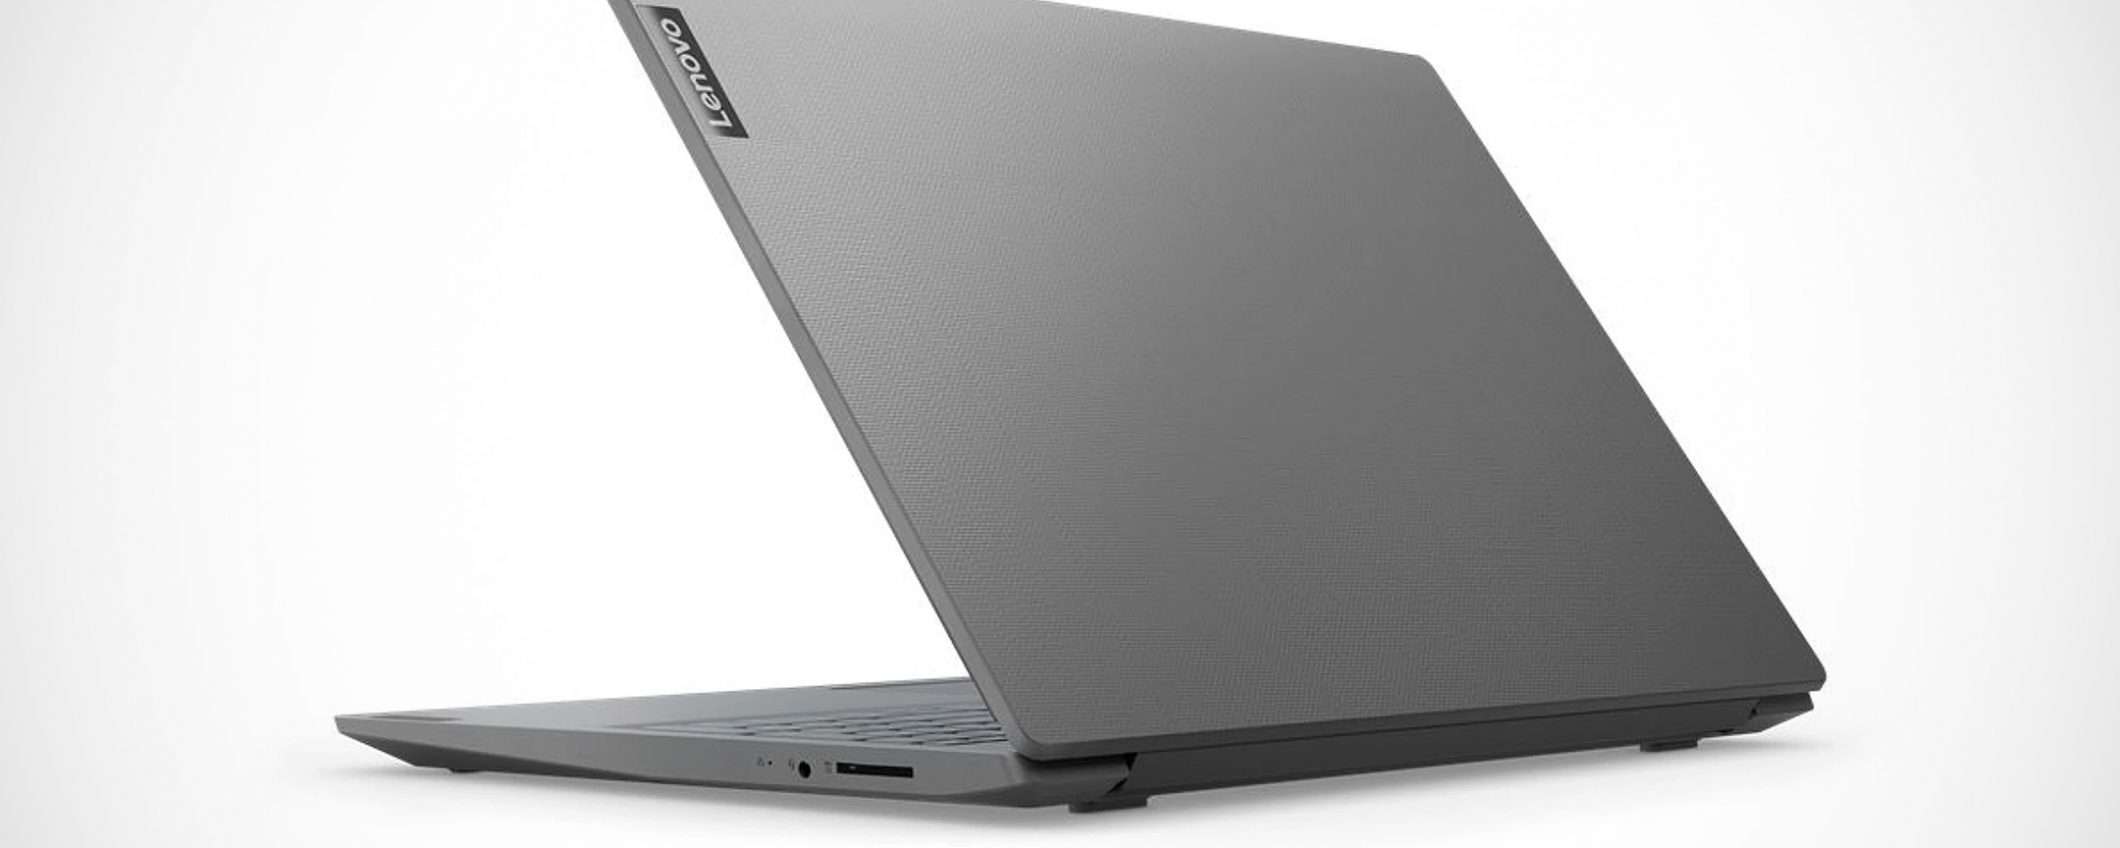 Il laptop Lenovo V15 in sconto del 20% su eBay